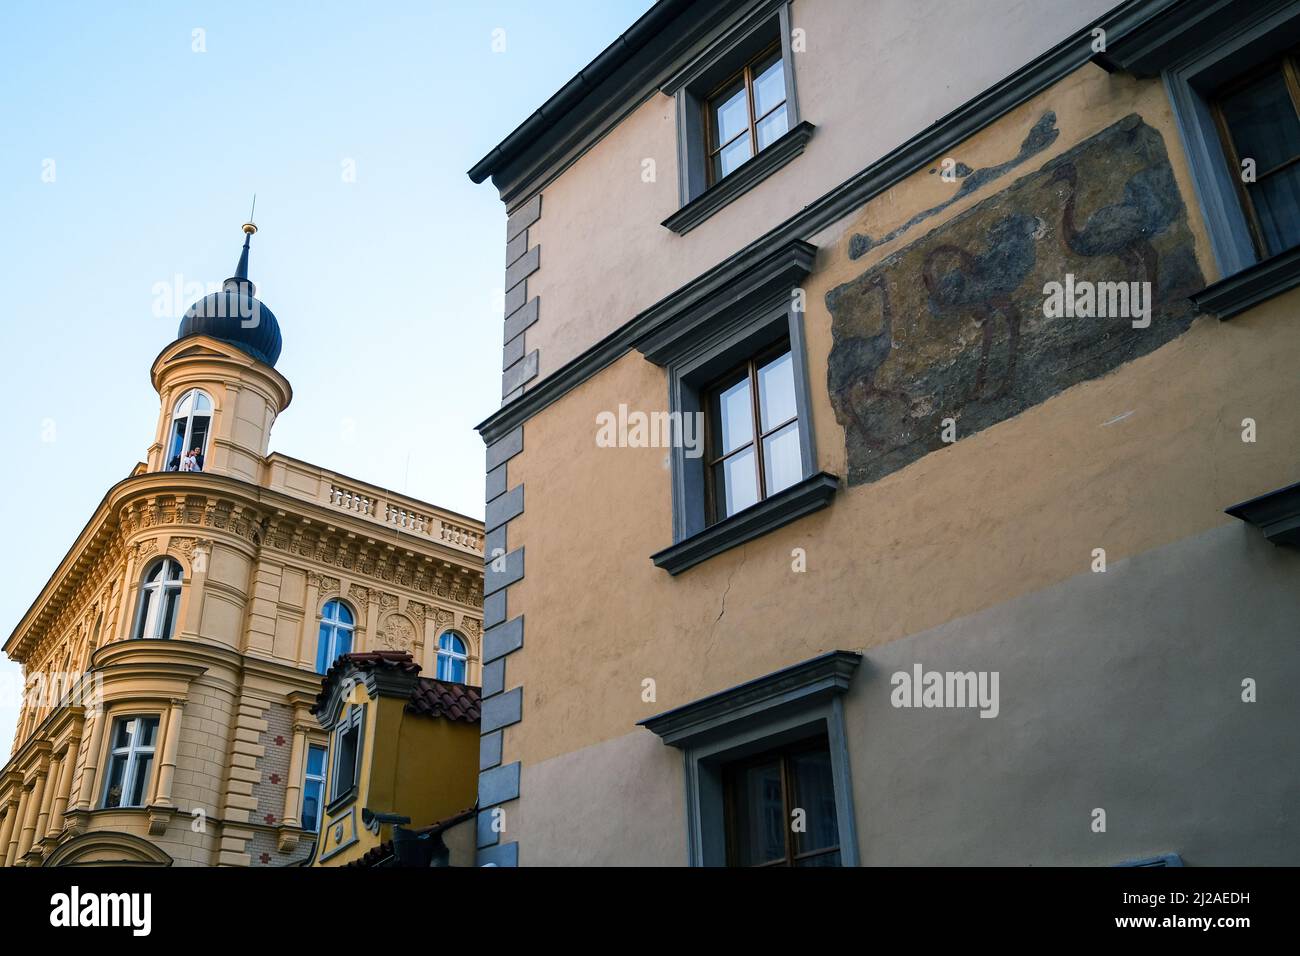 A street scene in the centre of historic Prague, Czech Republic. Stock Photo